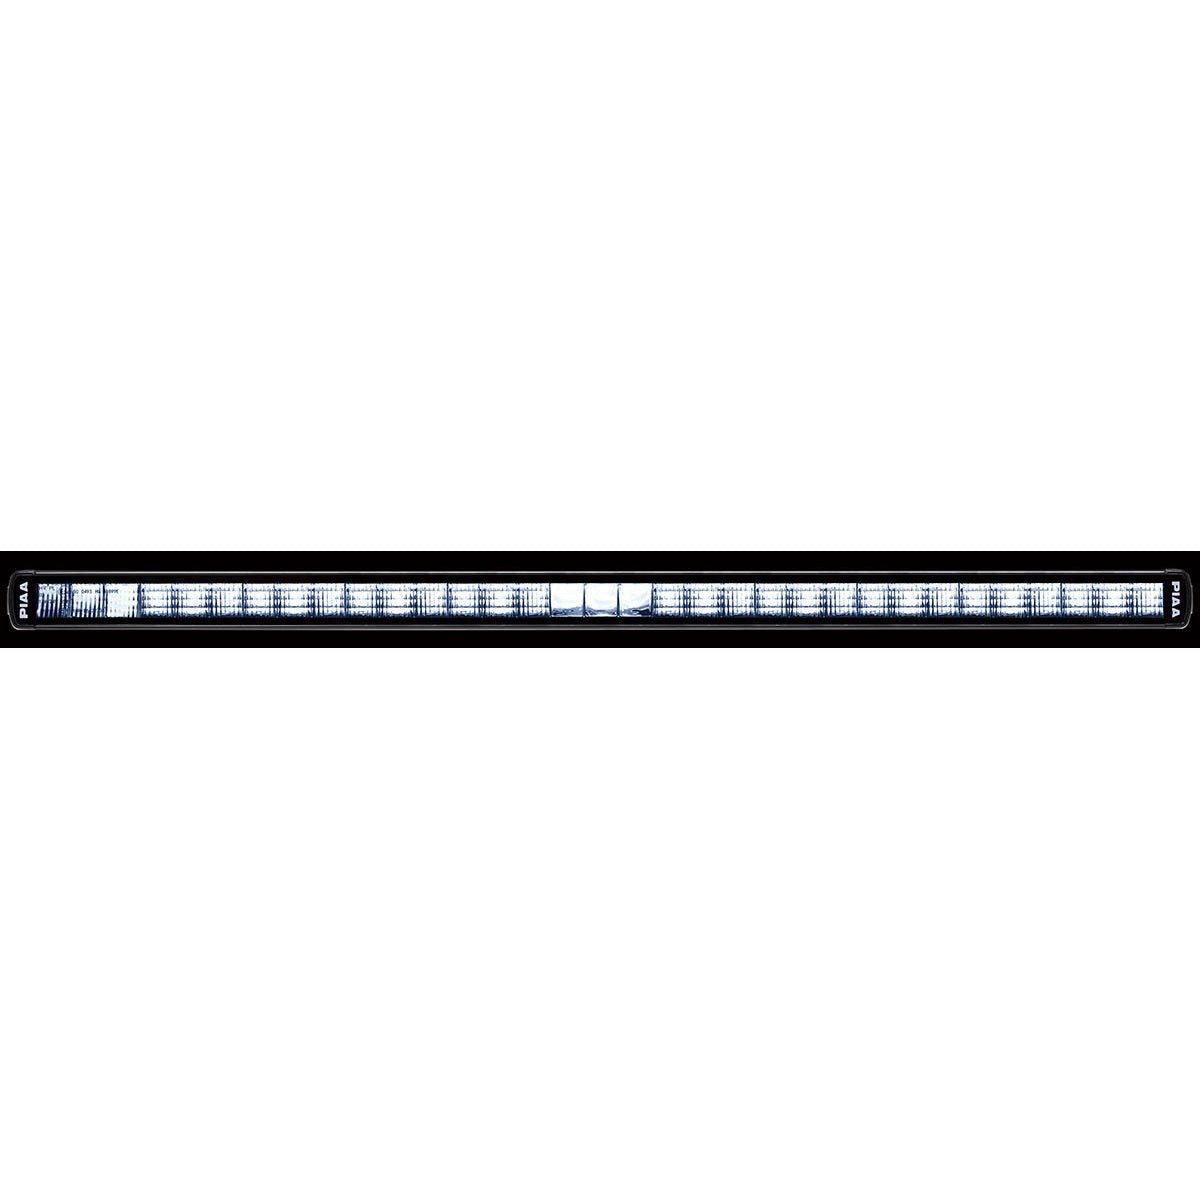 PIAA VRF30 LED Lightbar
mit E-Kennung